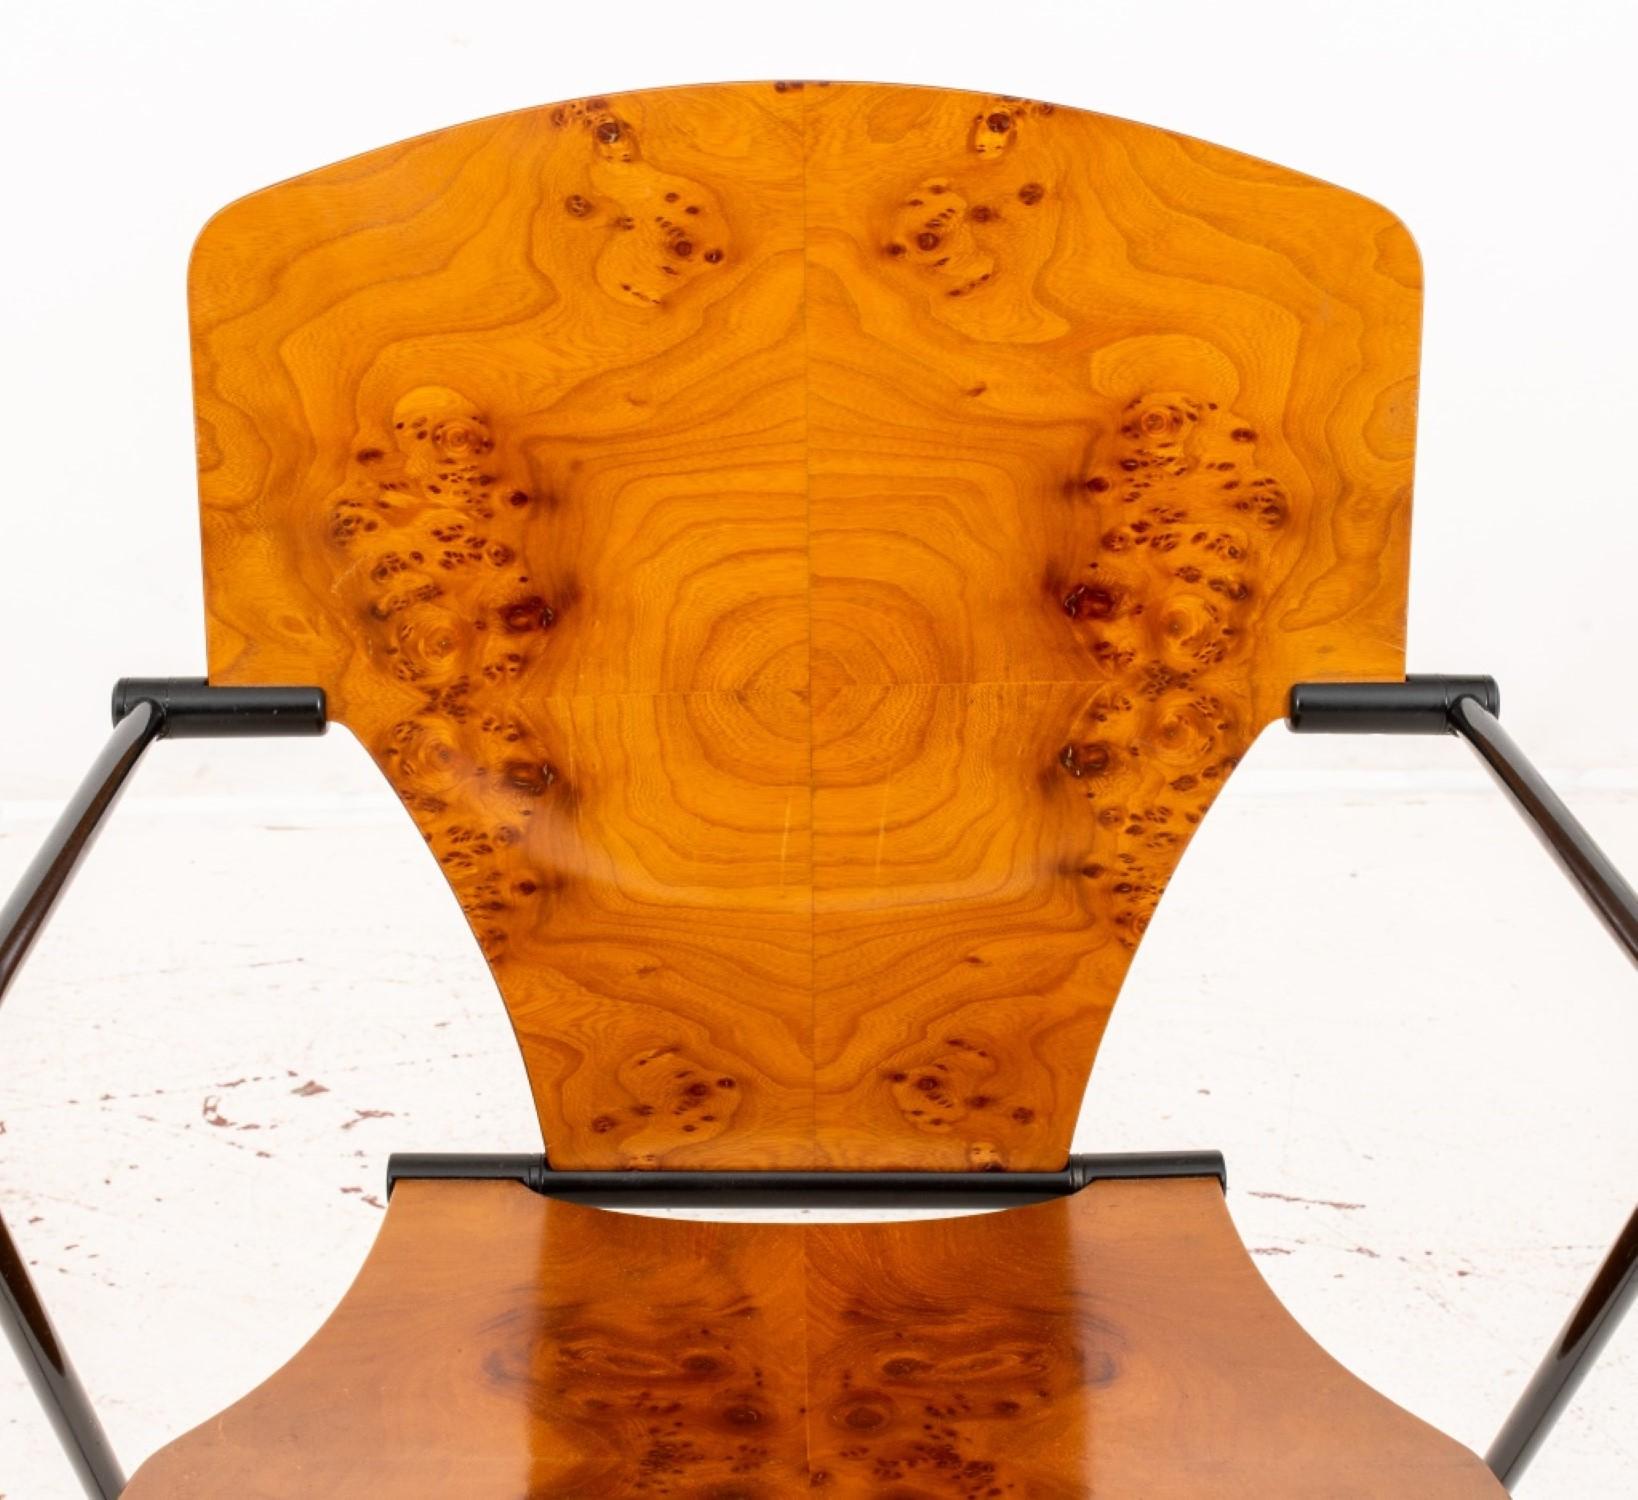 Josep Mora für Egoa: Stuhl „Modell 300“, 2 Stühle (20. Jahrhundert) im Angebot